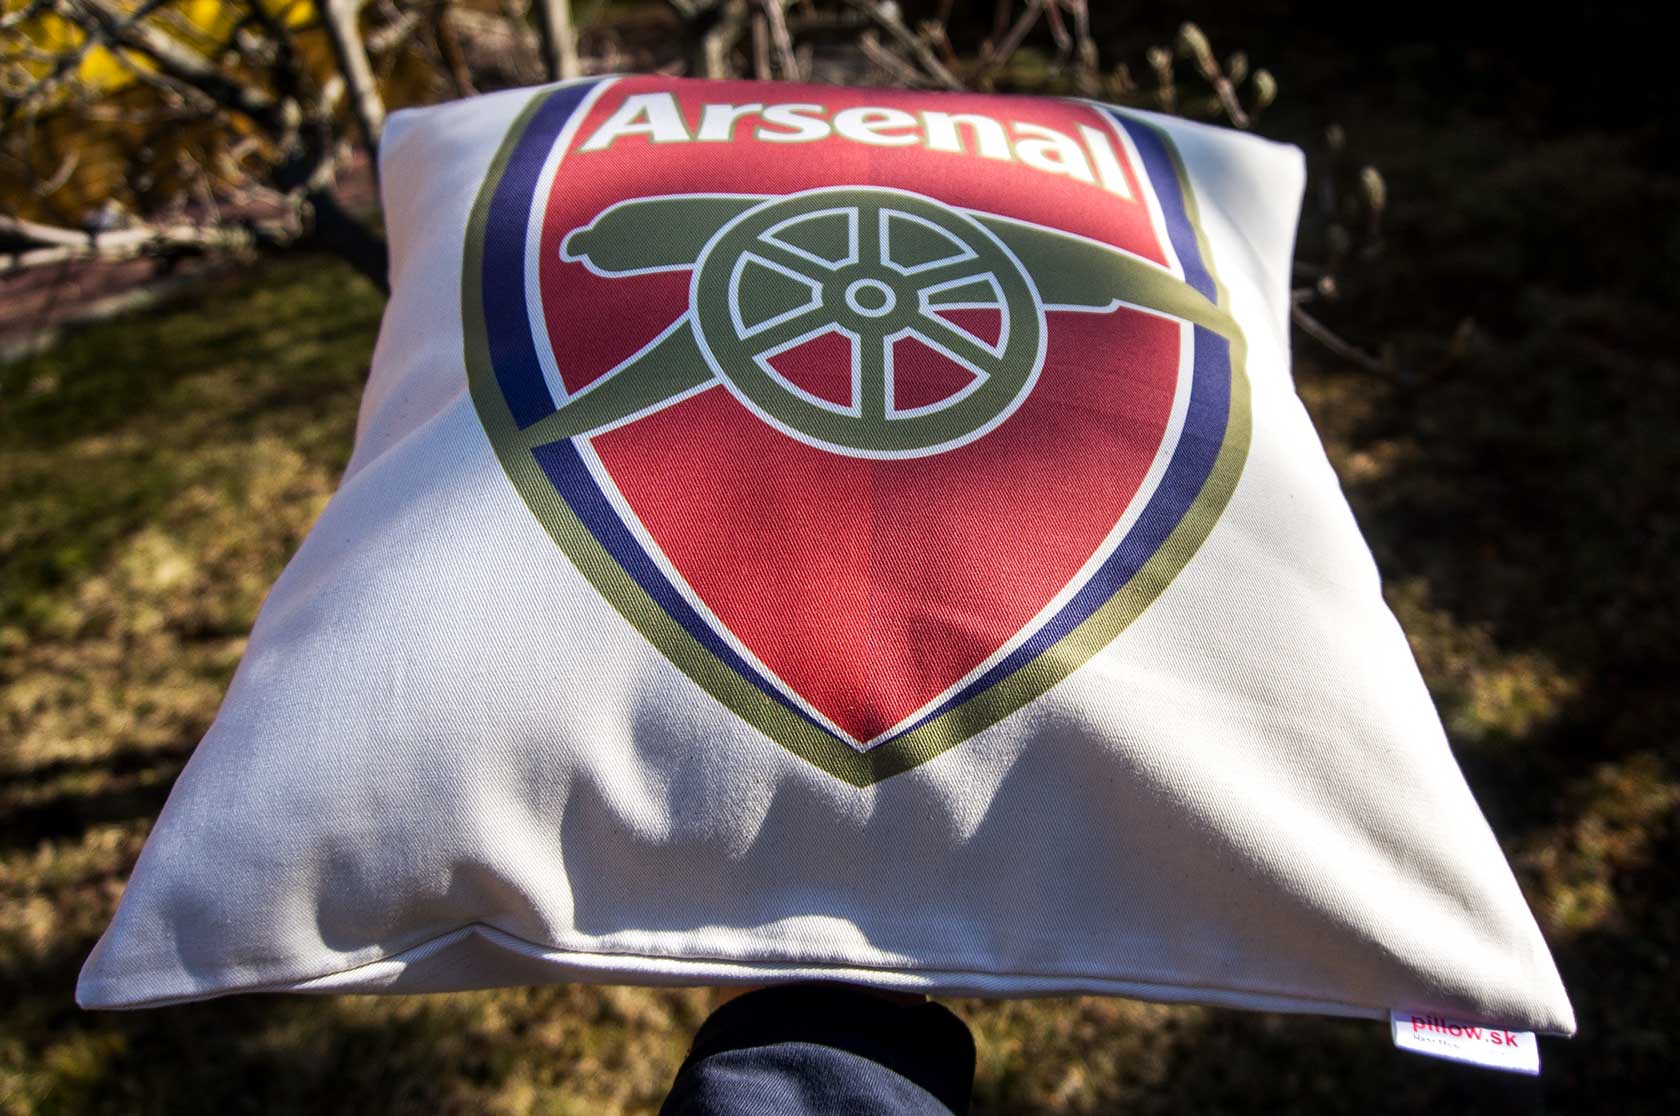 Vankúš Arsenal FC s logom futbalového klubu